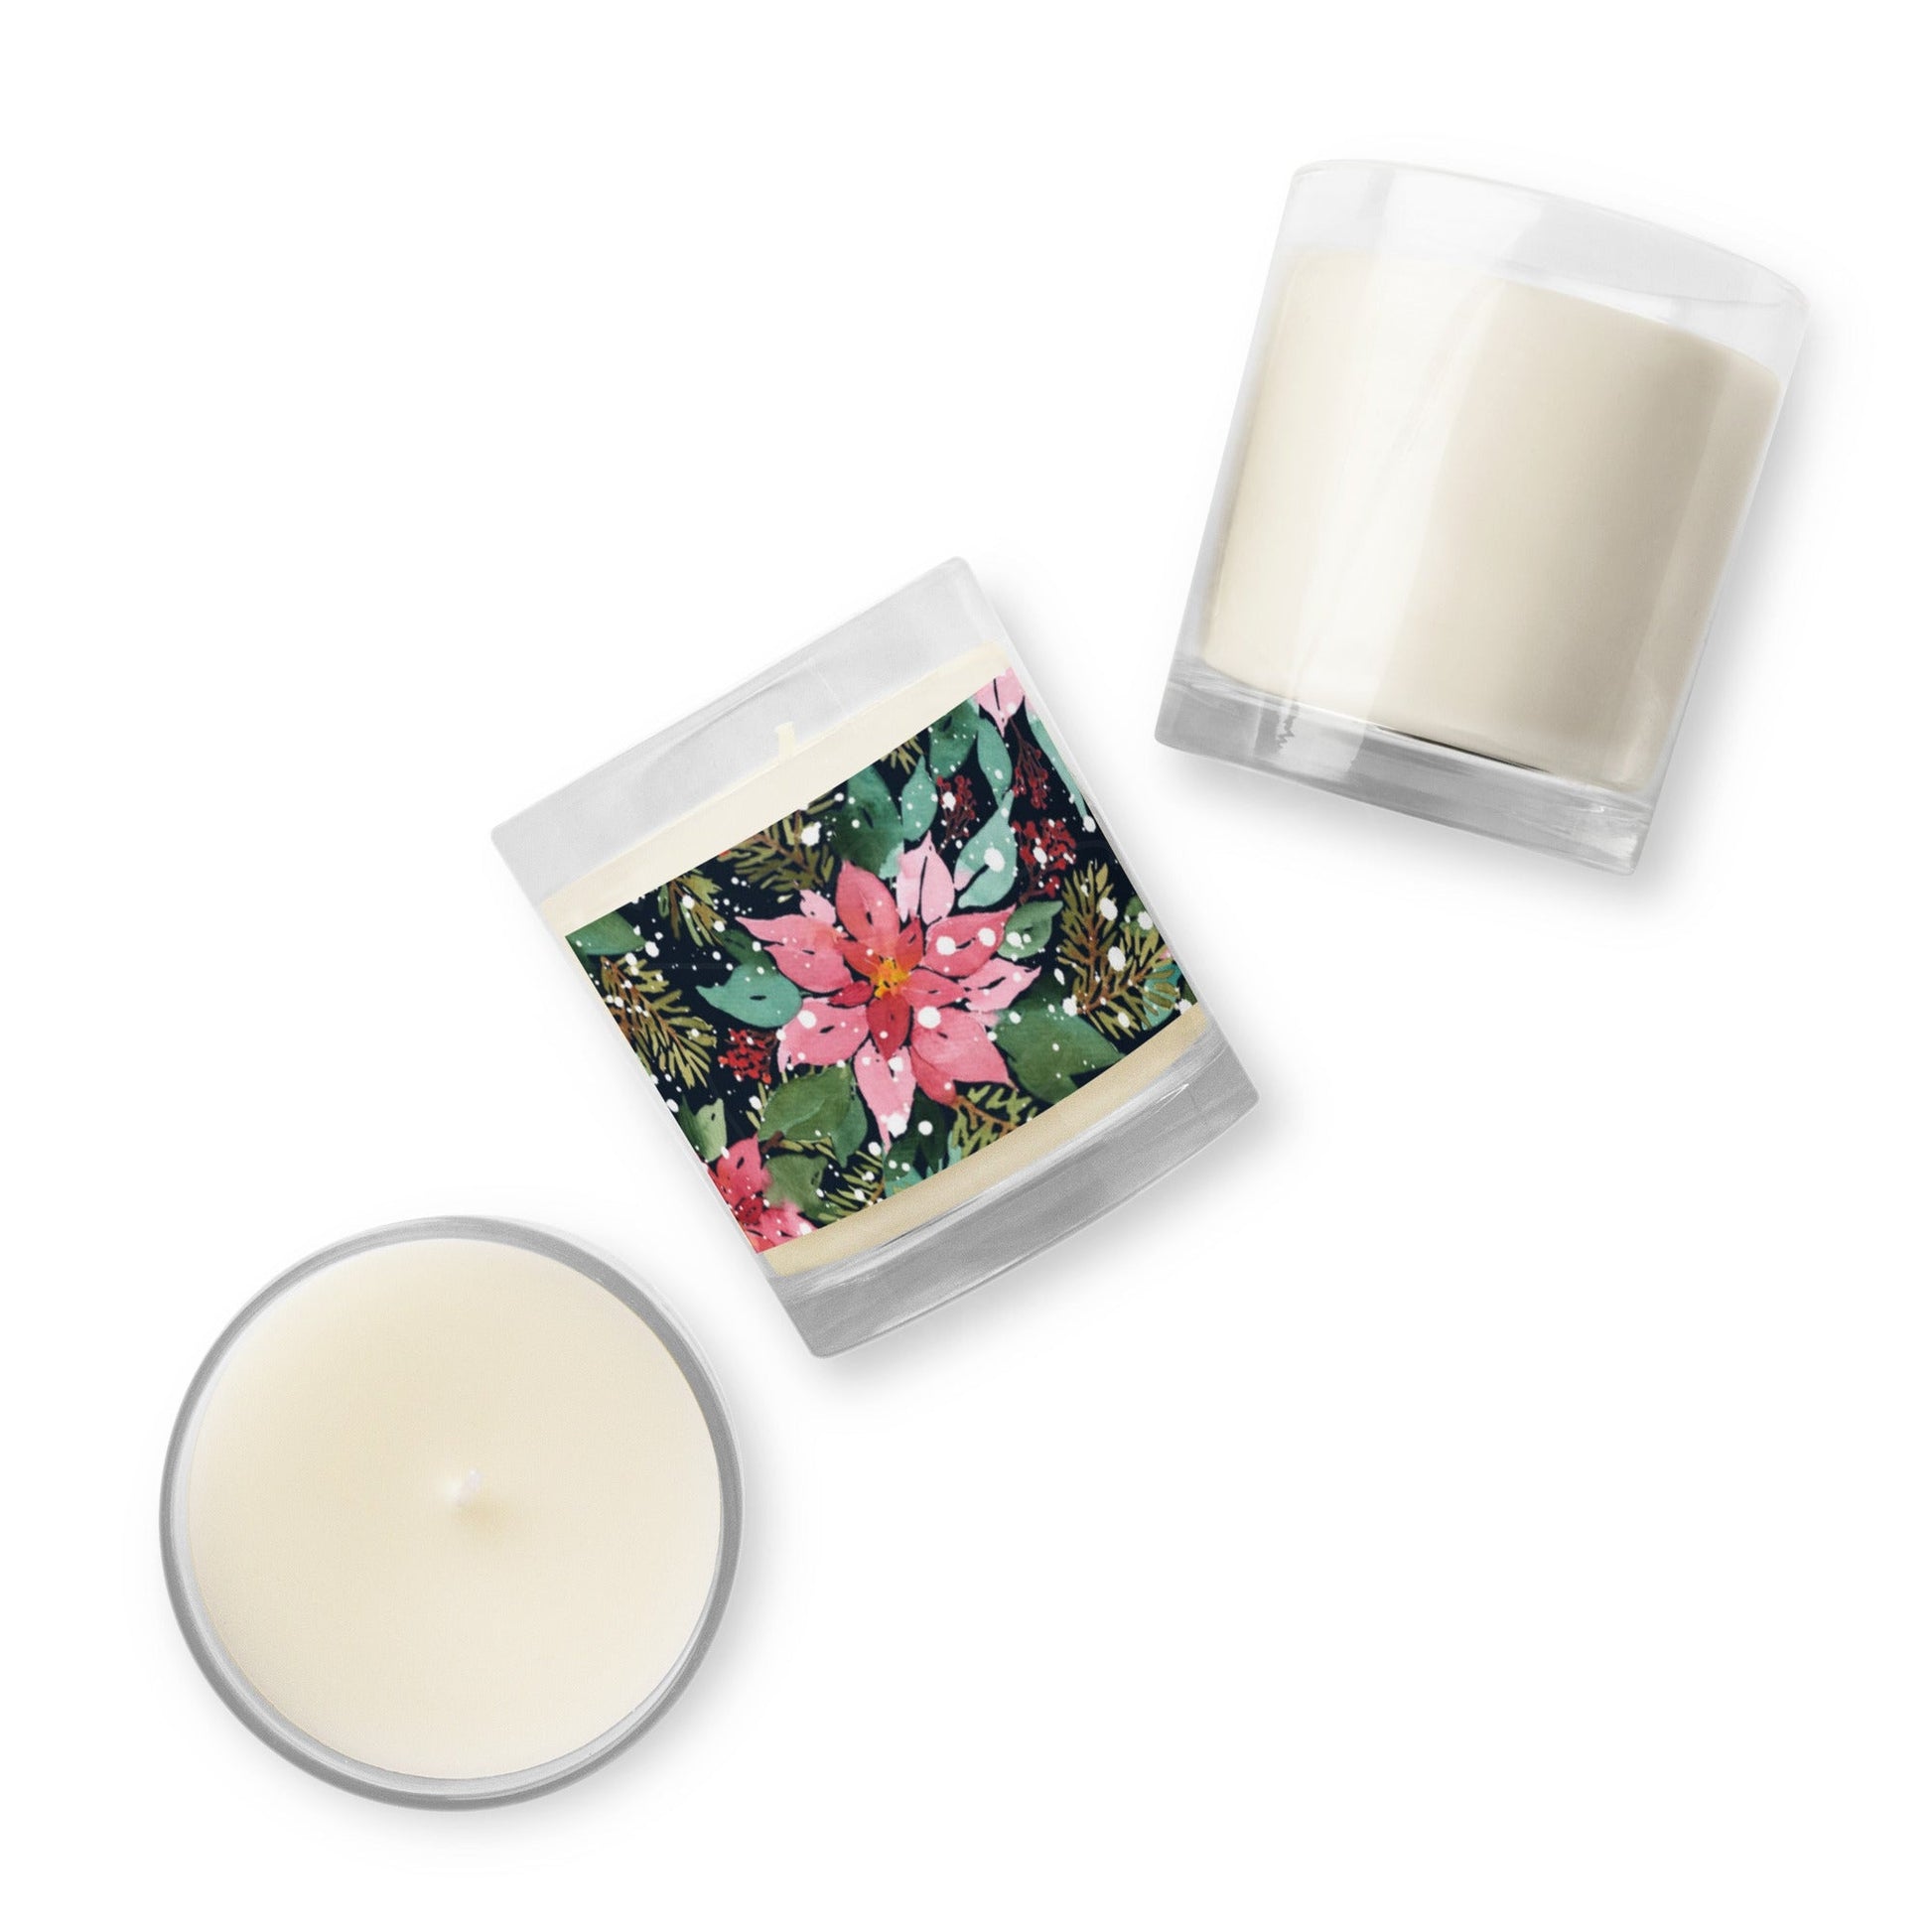 Glass Jar Soy Wax Floral Decorative Candle - #17 (Poinsettia) - Christi Studio